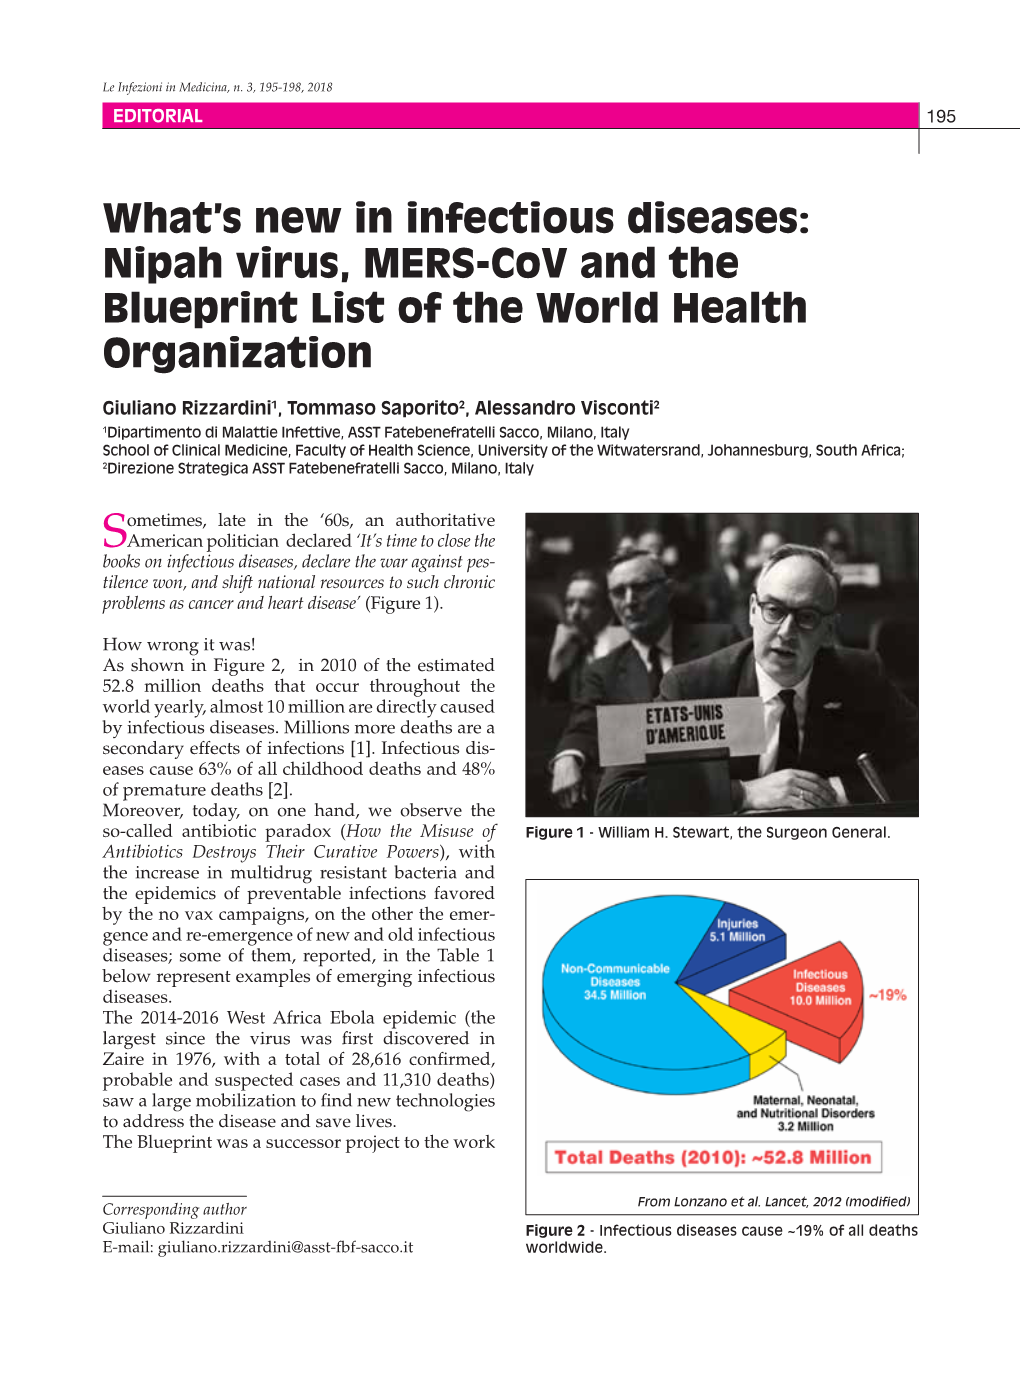 Nipah Virus, MERS-Cov and the Blueprint List of the World Health Organization